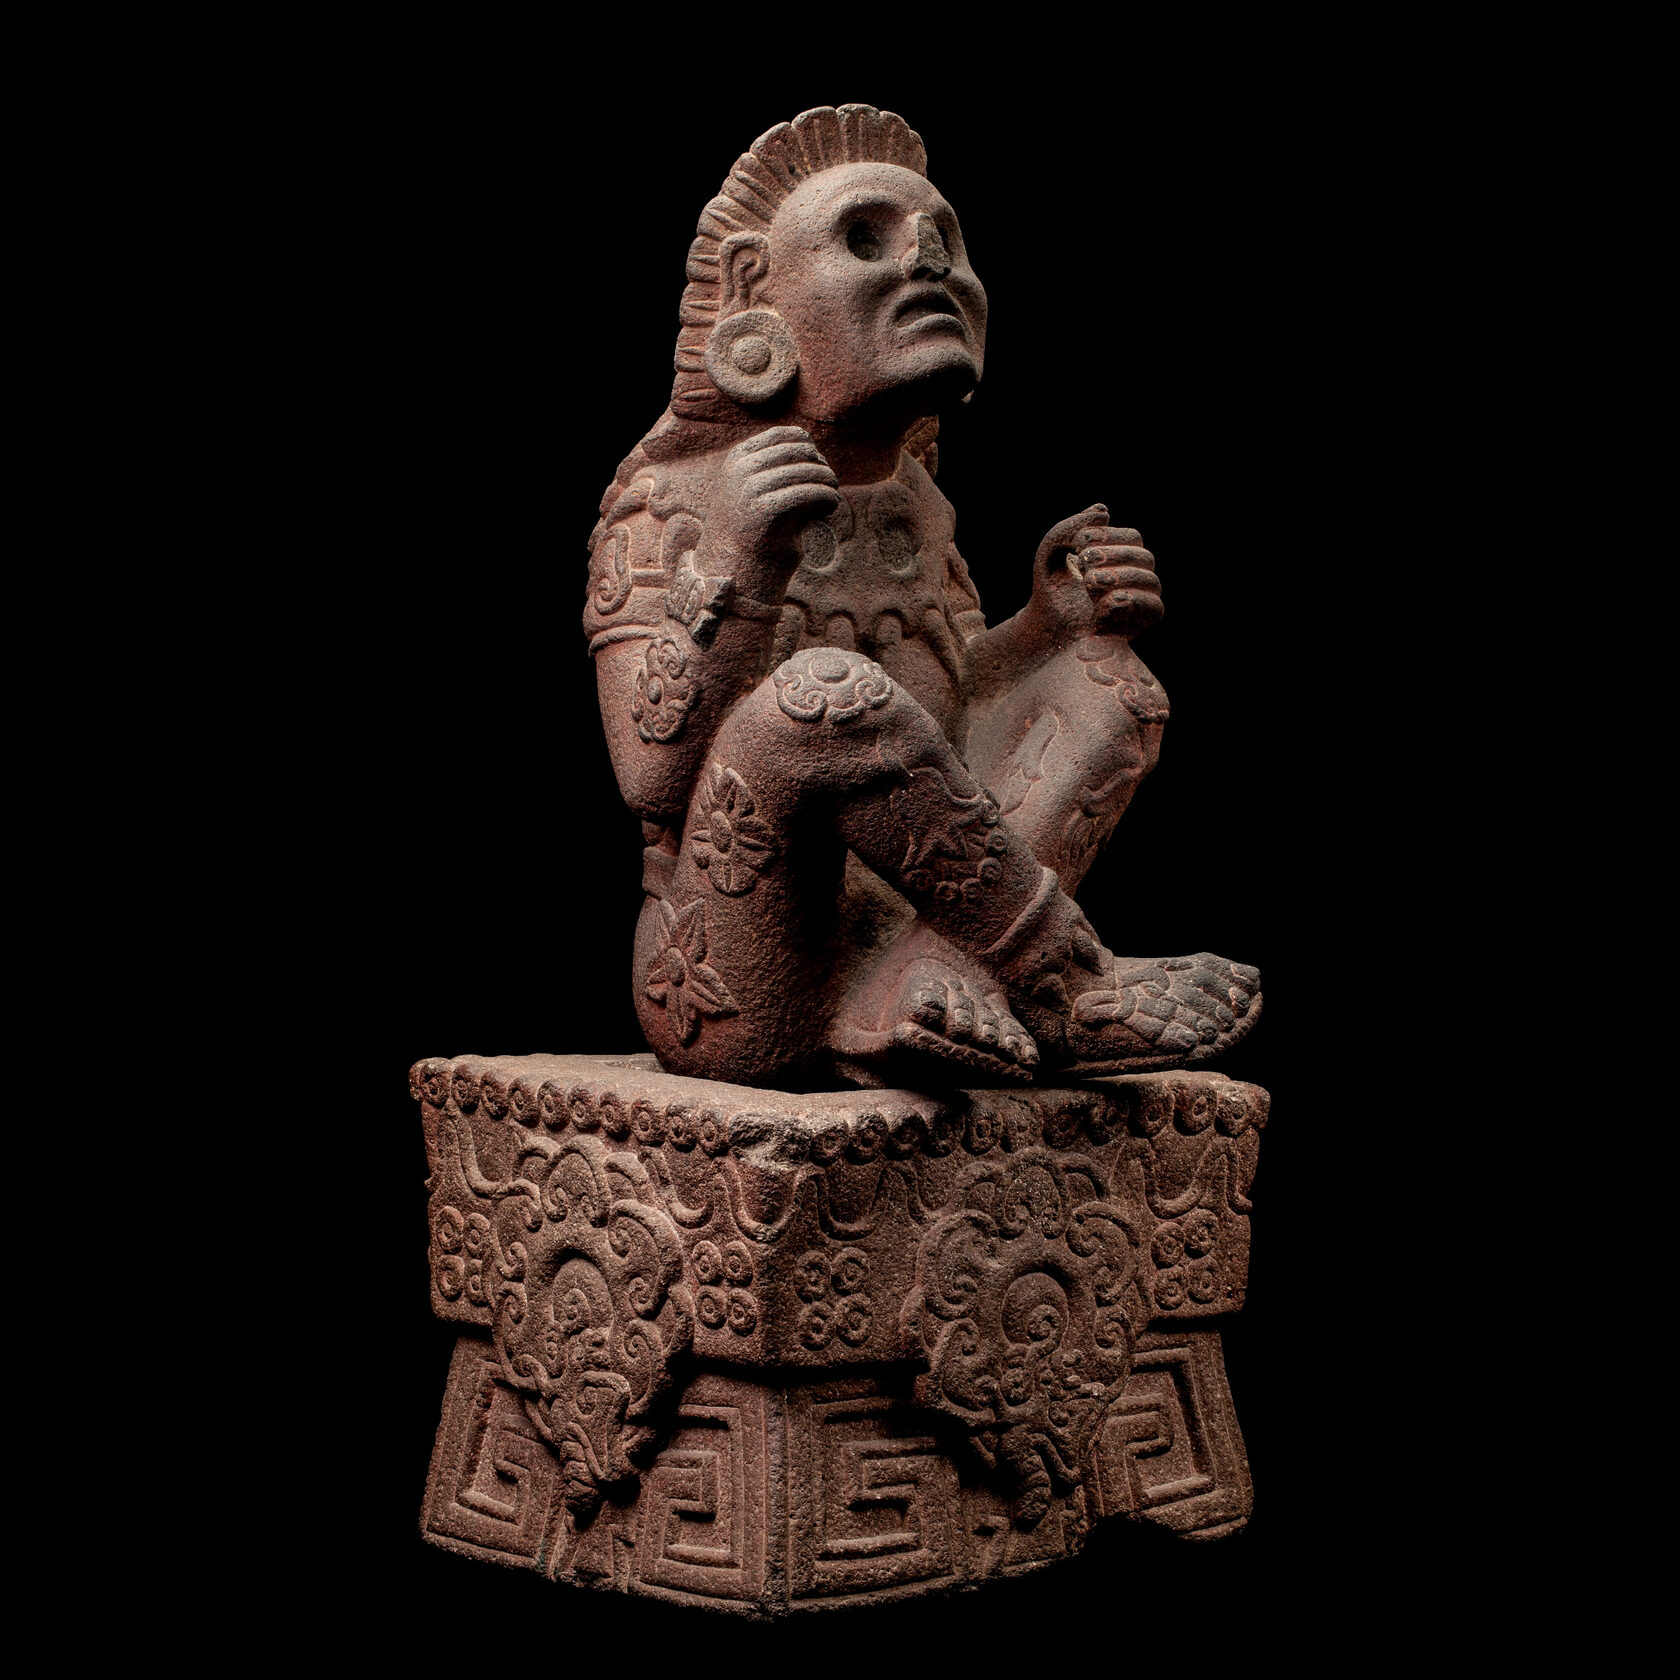 Шочипилли. Мексика, 1250-1500 гг. н.э. Коллекция Museo Nacional de Antropología, Mexico.